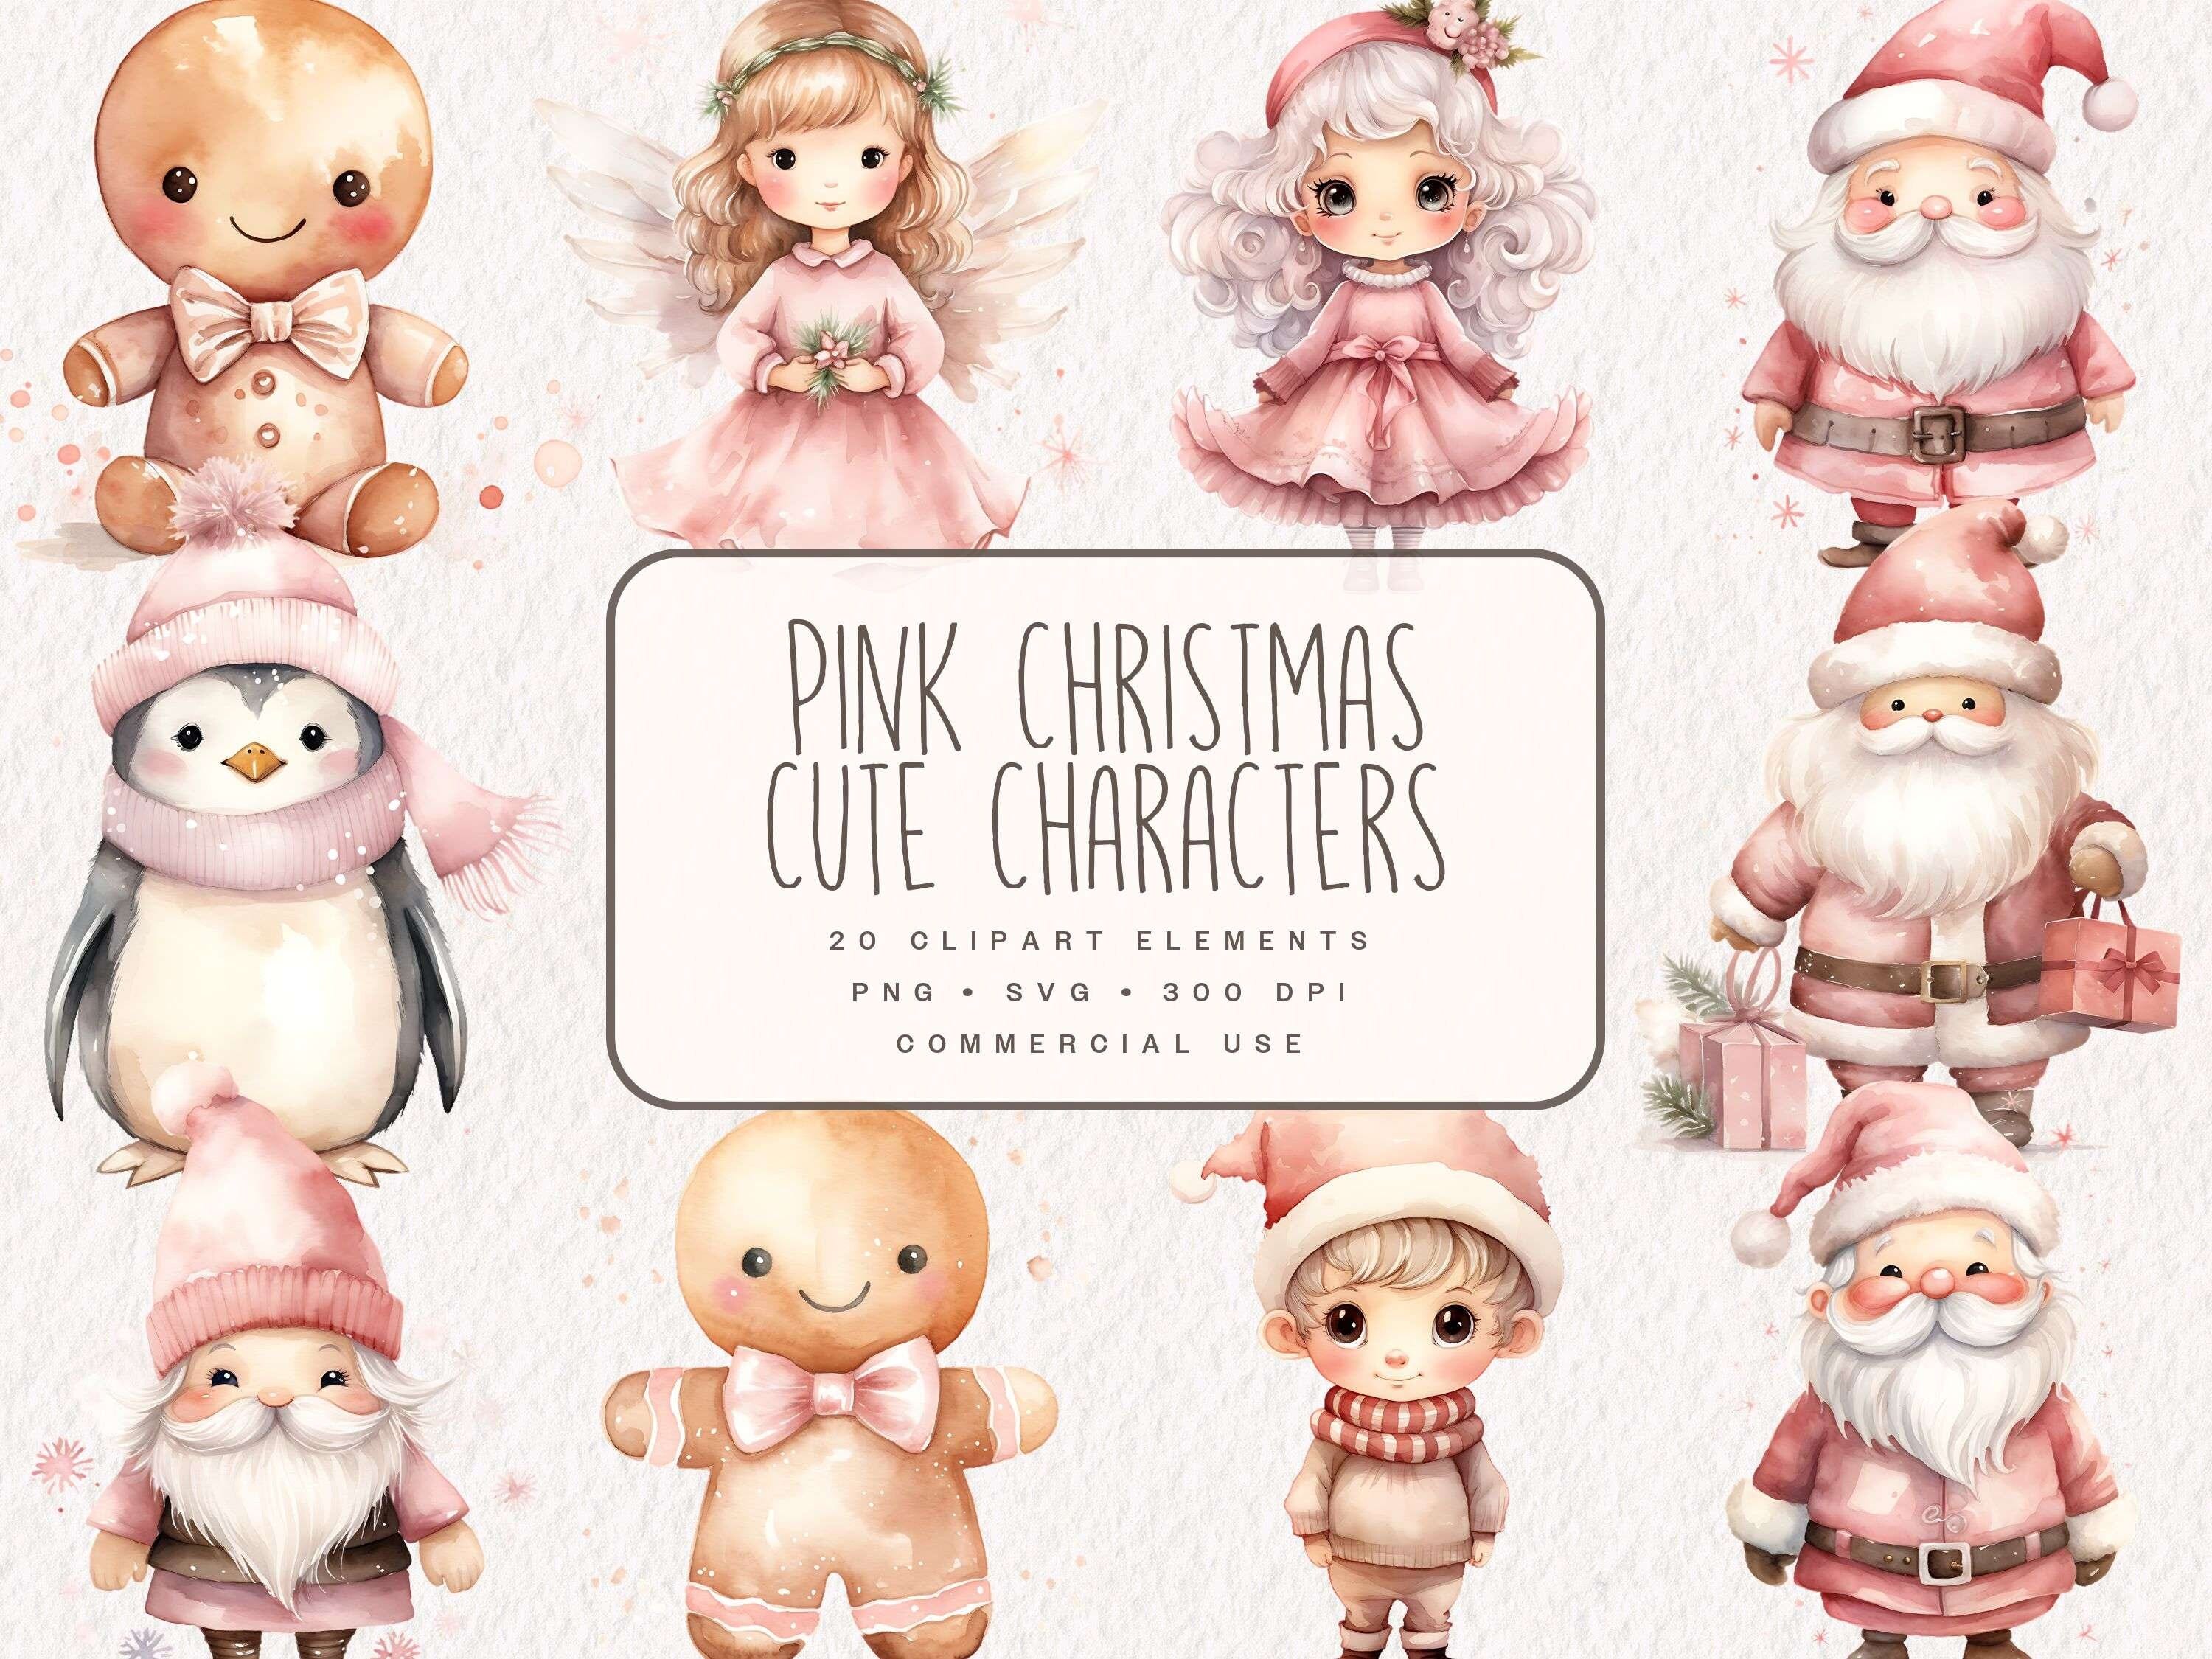 Christmas Cute Characters Clipart, Pink Watercolor Xmas clip art SVG and PNG Bundle, Santa Claus, Reindeer, Snowman, Elf, Gingerbread